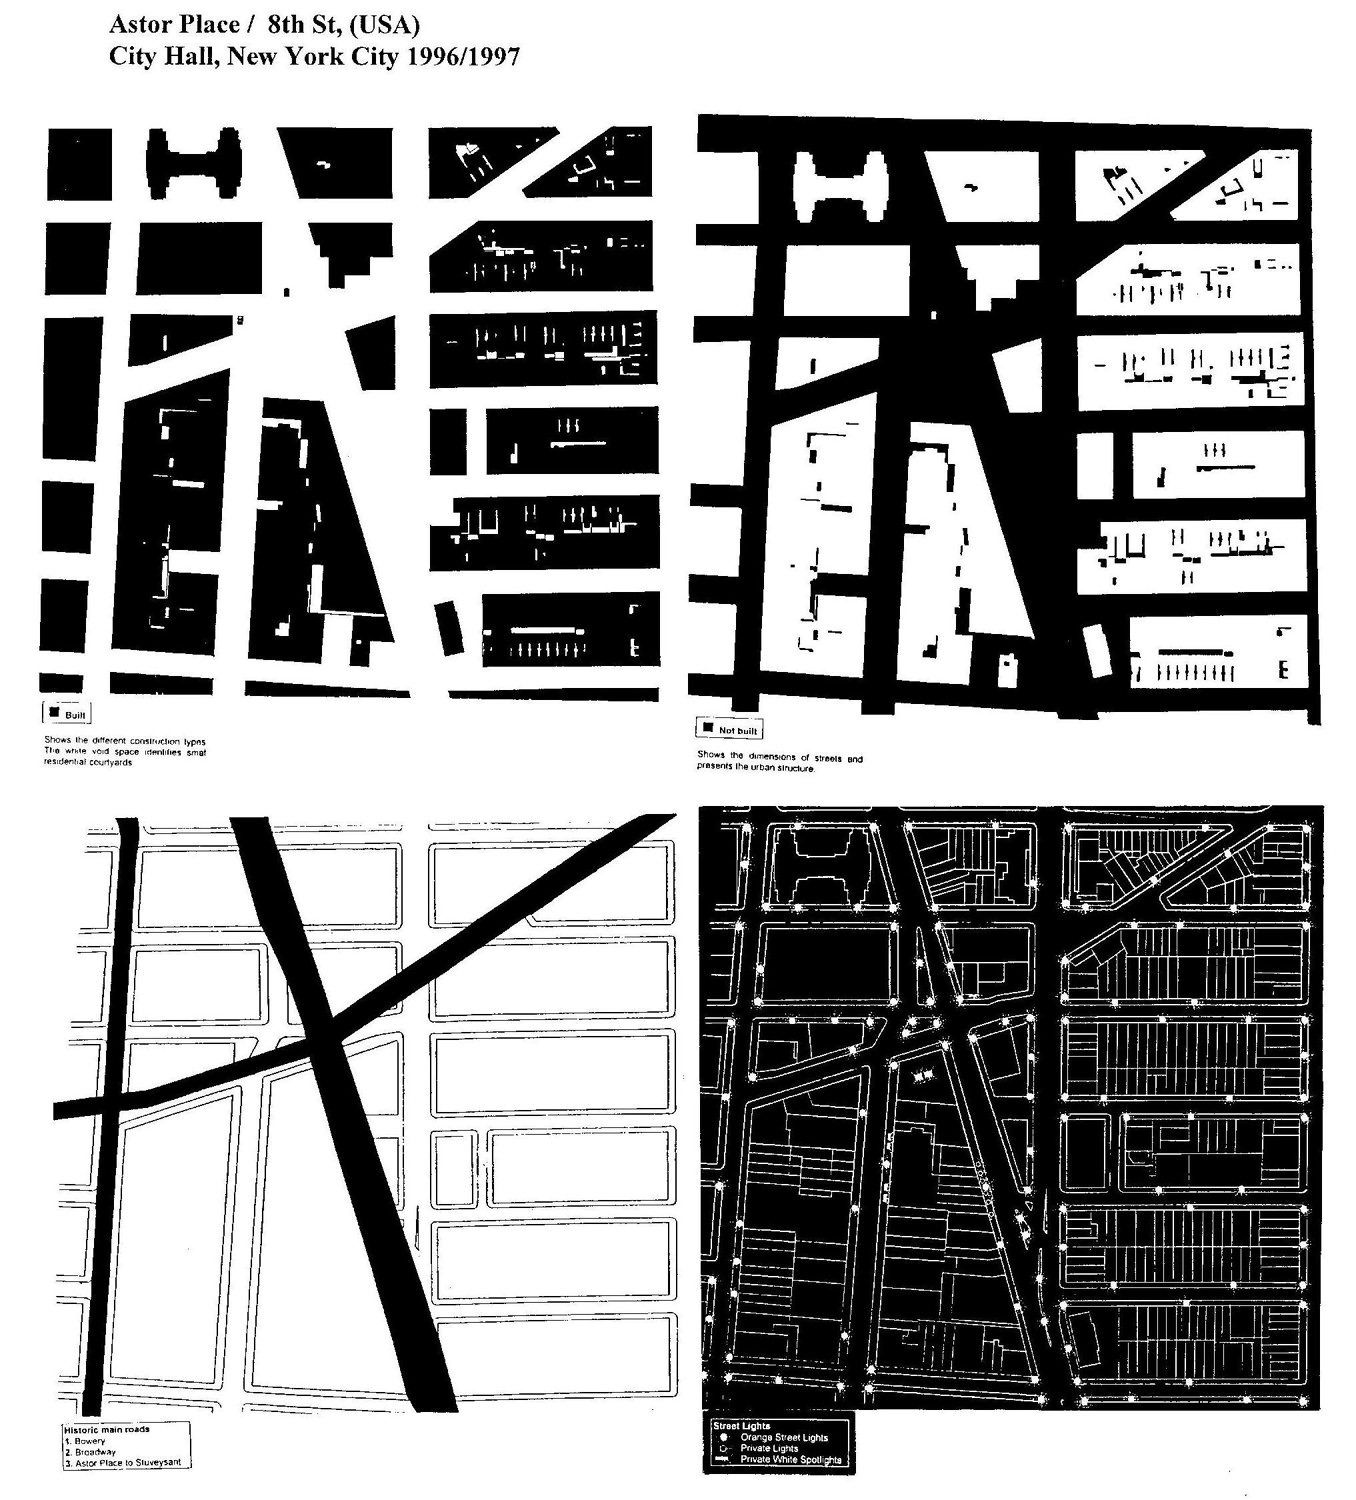  Pedestrian Analysis: Street scape and street lights 